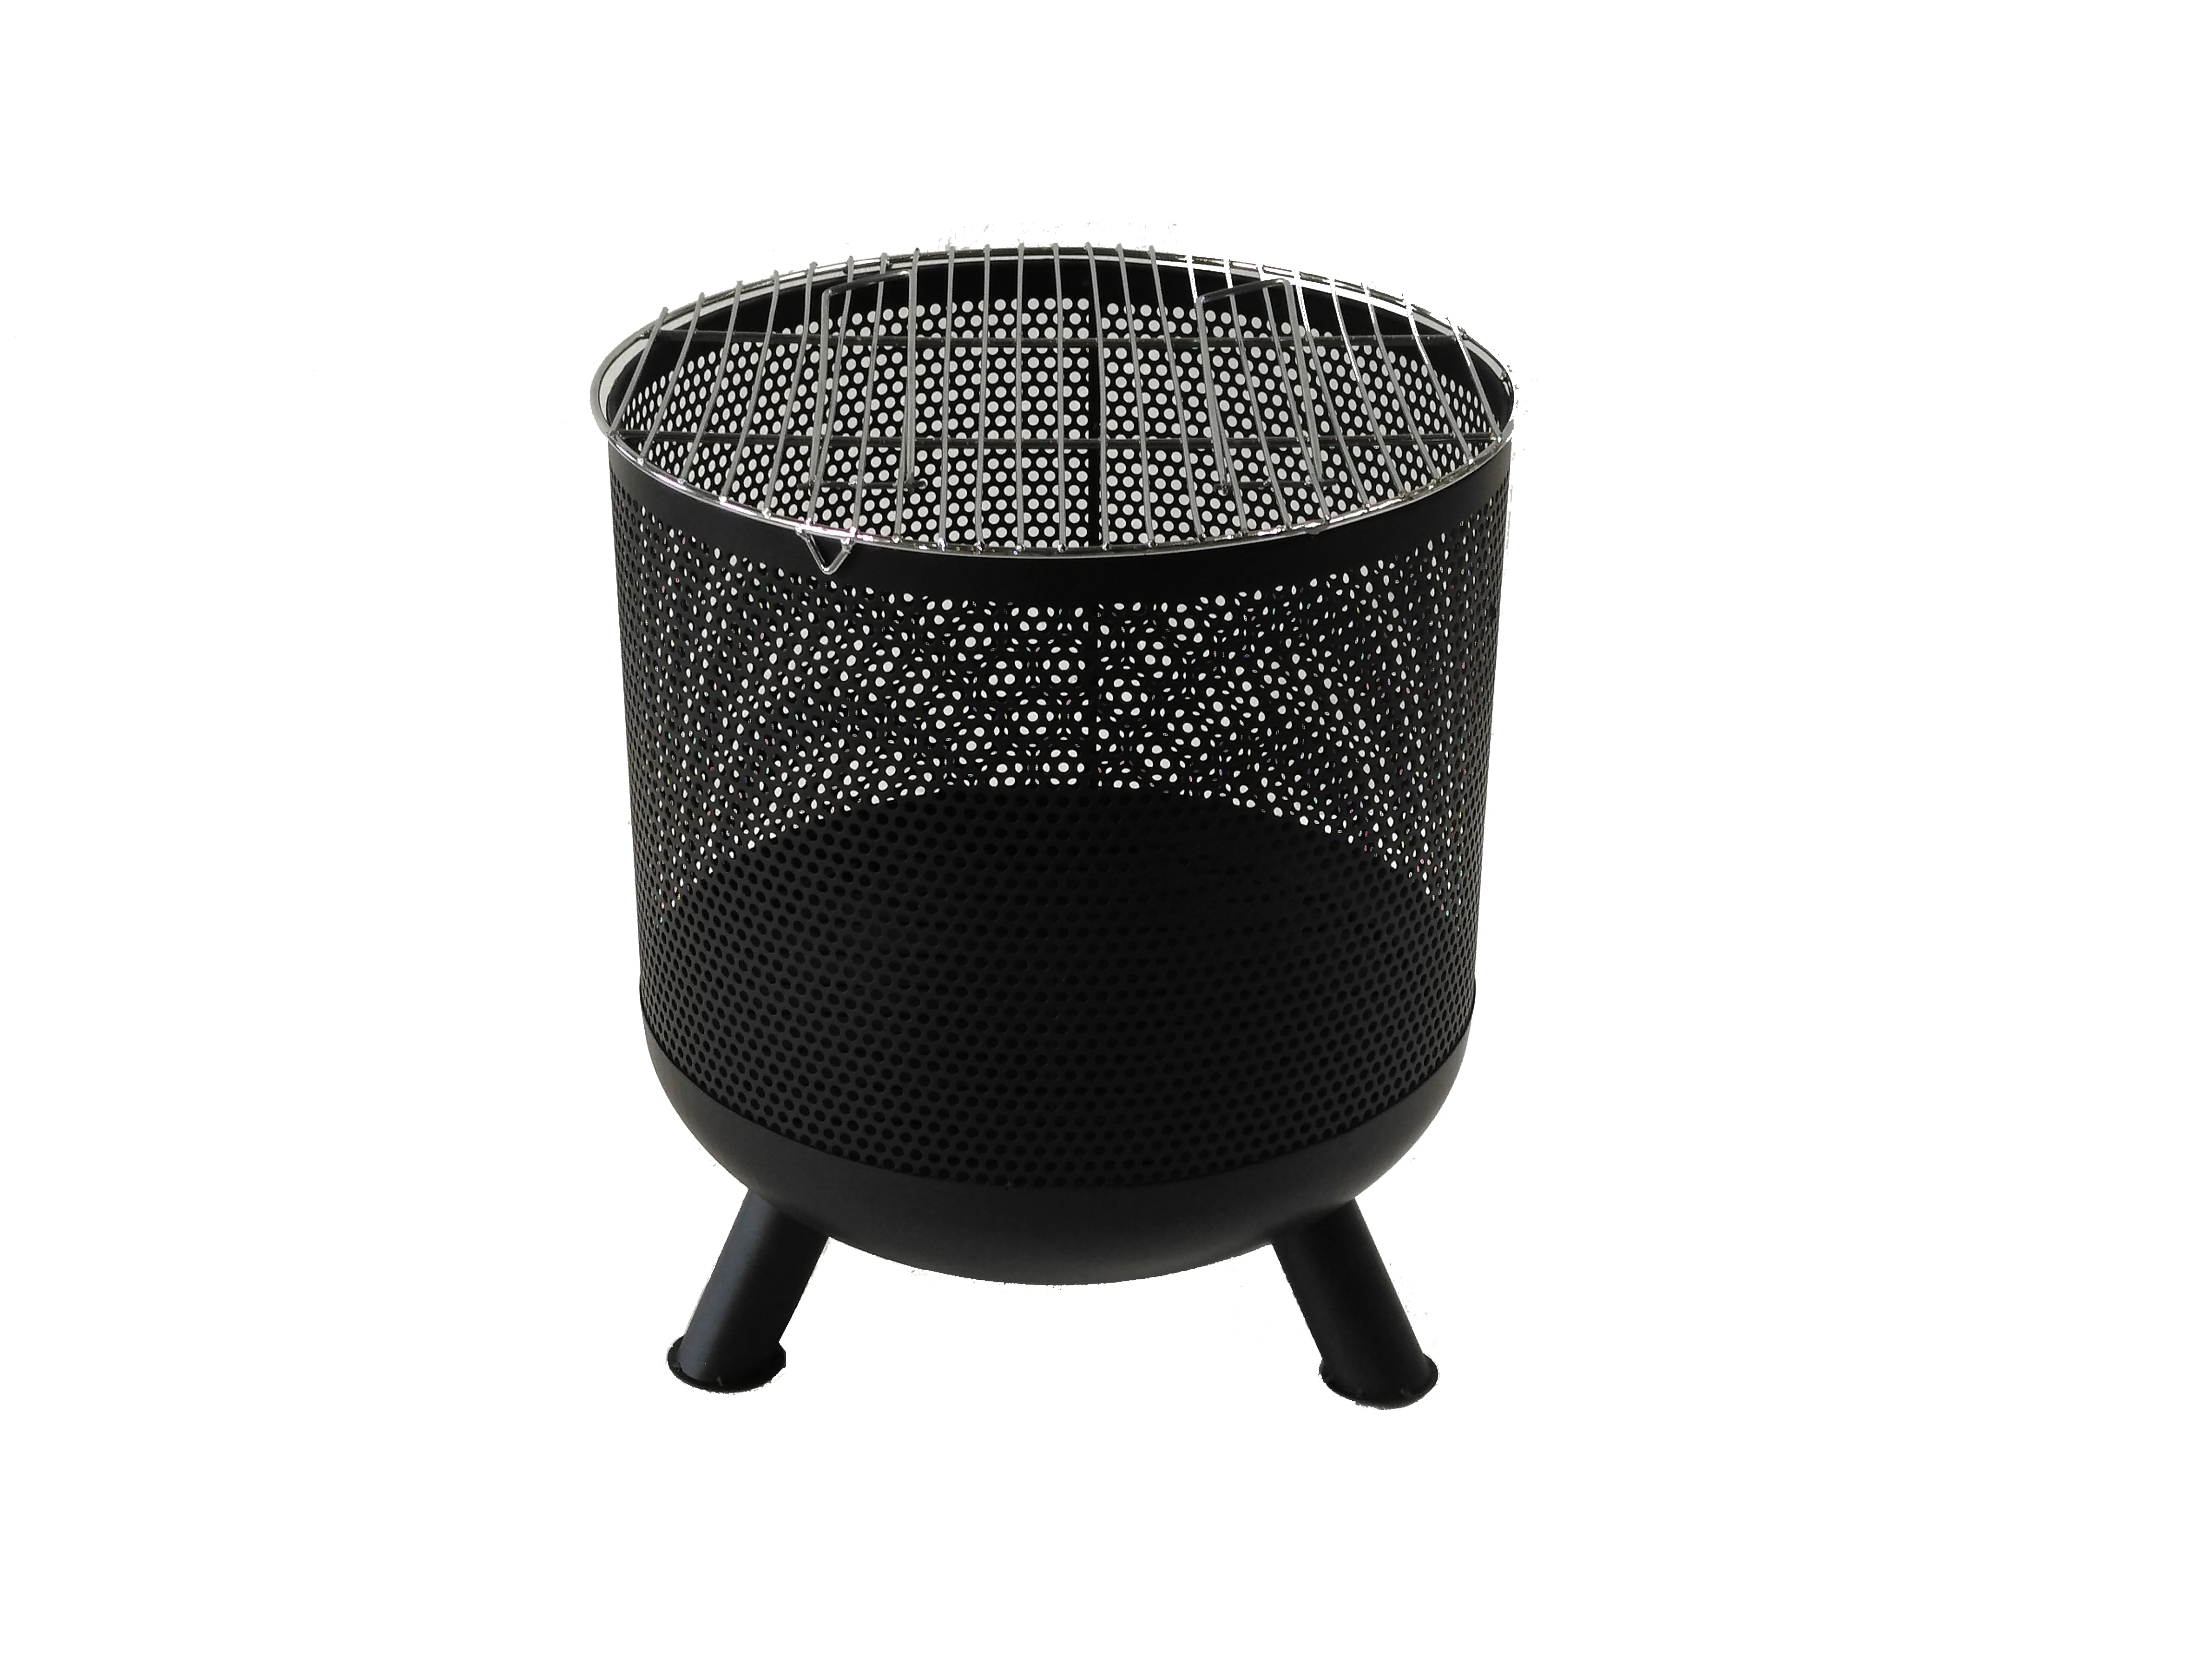 BBQ Garden outdoor steel fire basket for easy assemble